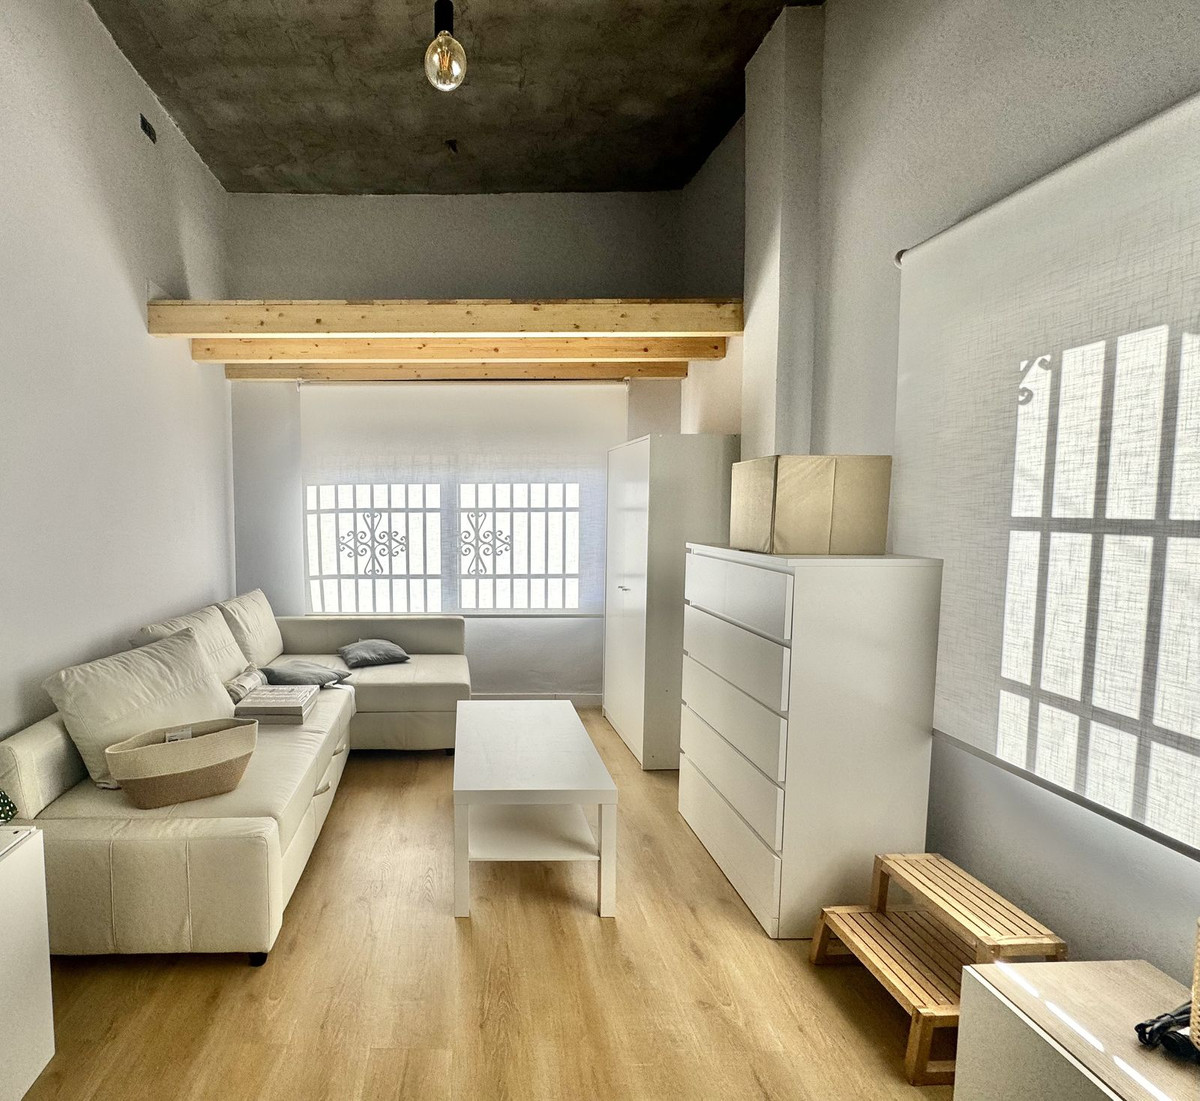 Apartment Ground Floor in Torremolinos, Costa del Sol
